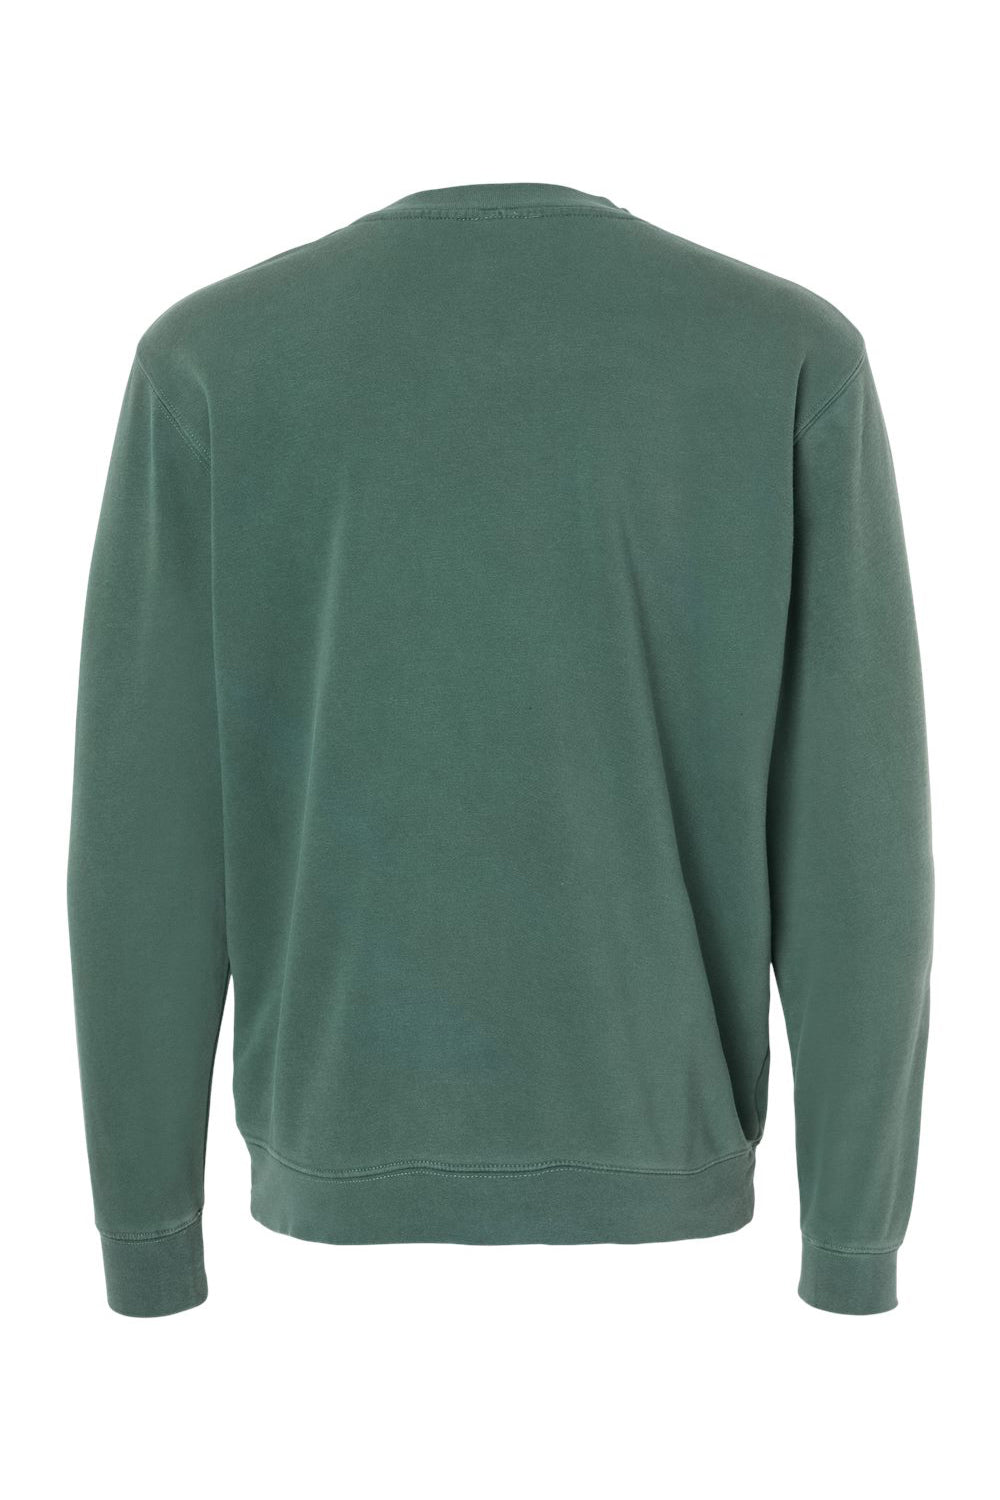 Independent Trading Co. PRM3500 Mens Pigment Dyed Crewneck Sweatshirt Alpine Green Flat Back